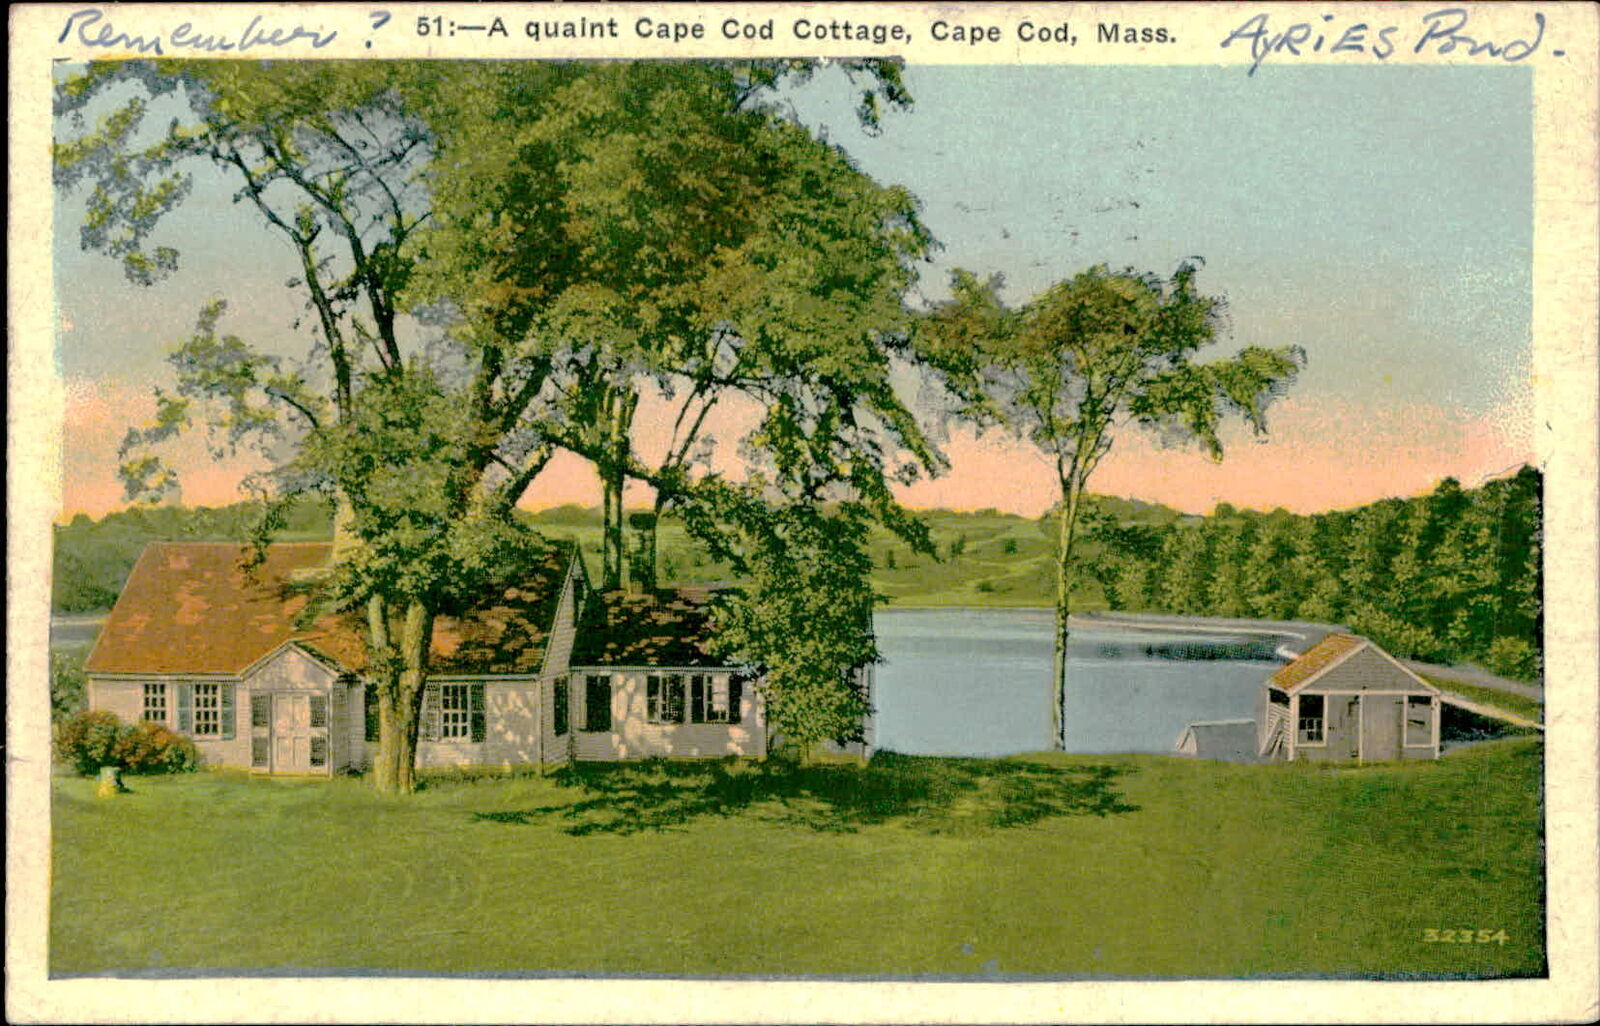 Postcard: Remember. 51: A quaint Cape Cod Cottage, Cape Cod, Mass. ARI